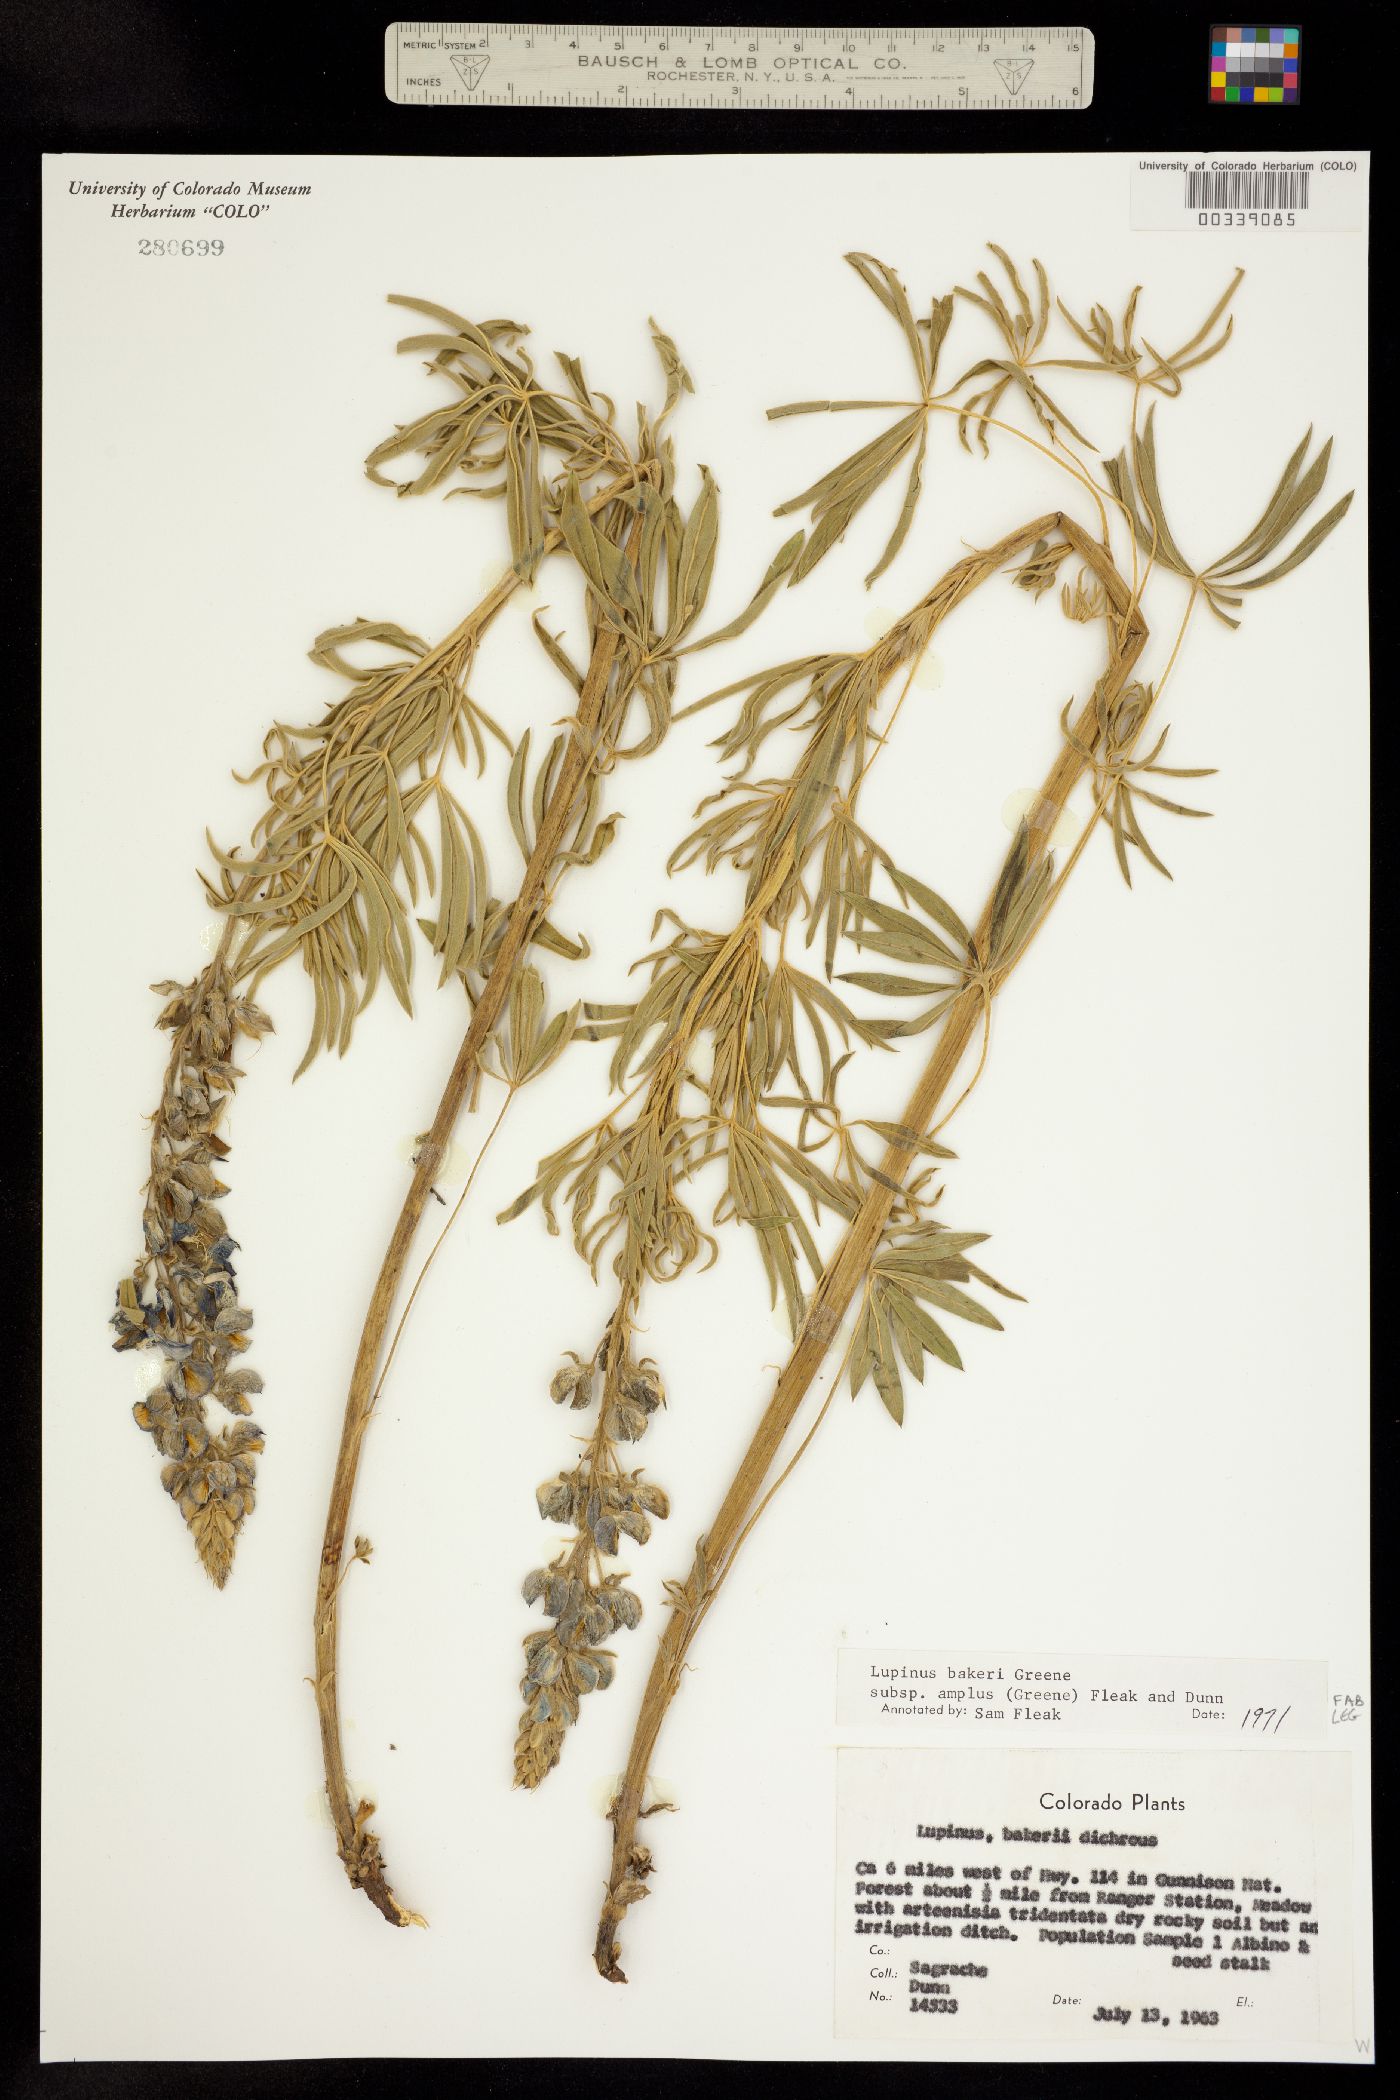 Lupinus bakeri ssp. amplus image